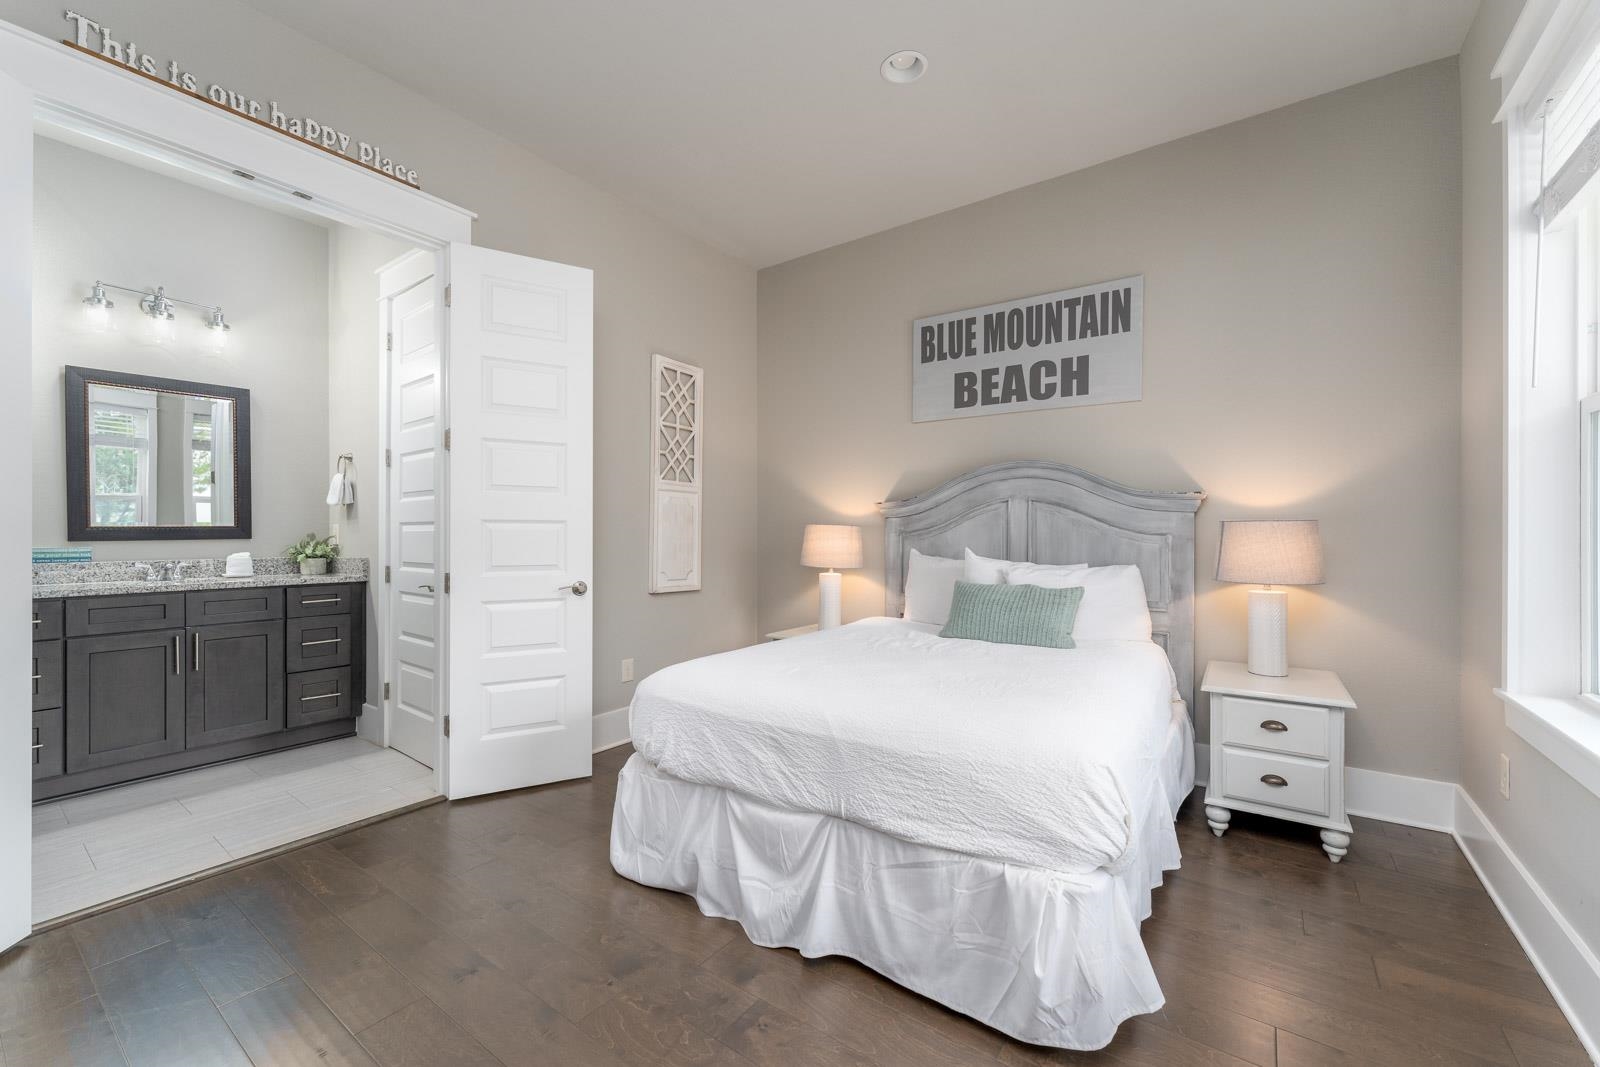 301 Gulfview Circle,Santa Rosa Beach,Florida 32459,4 Bedrooms Bedrooms,3 BathroomsBathrooms,Detached single family,301 Gulfview Circle,368714